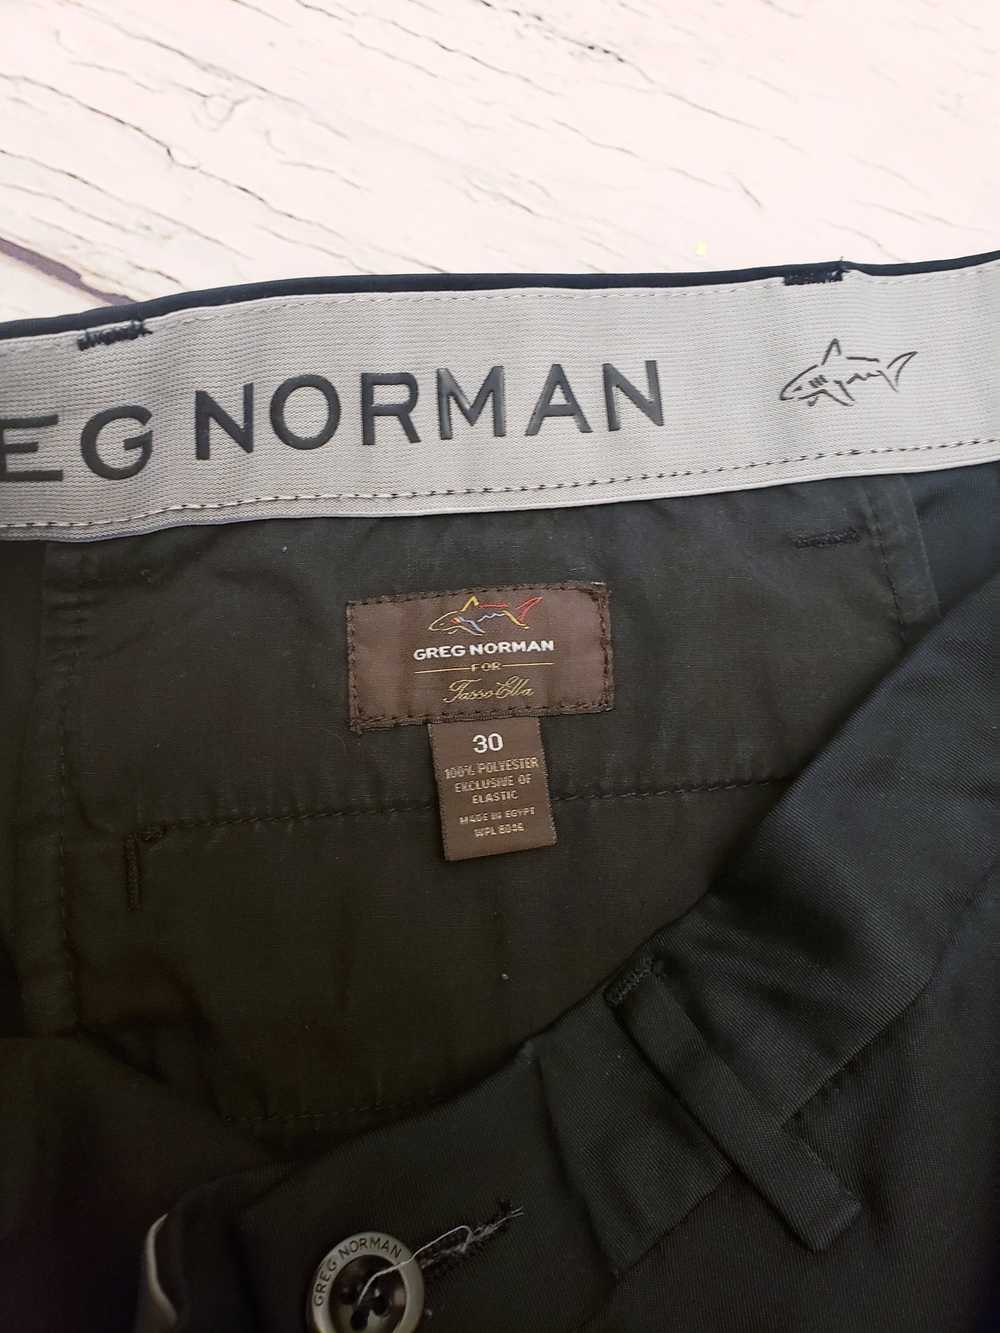 Greg Norman Greg Norman Shorts Size 30 - image 3